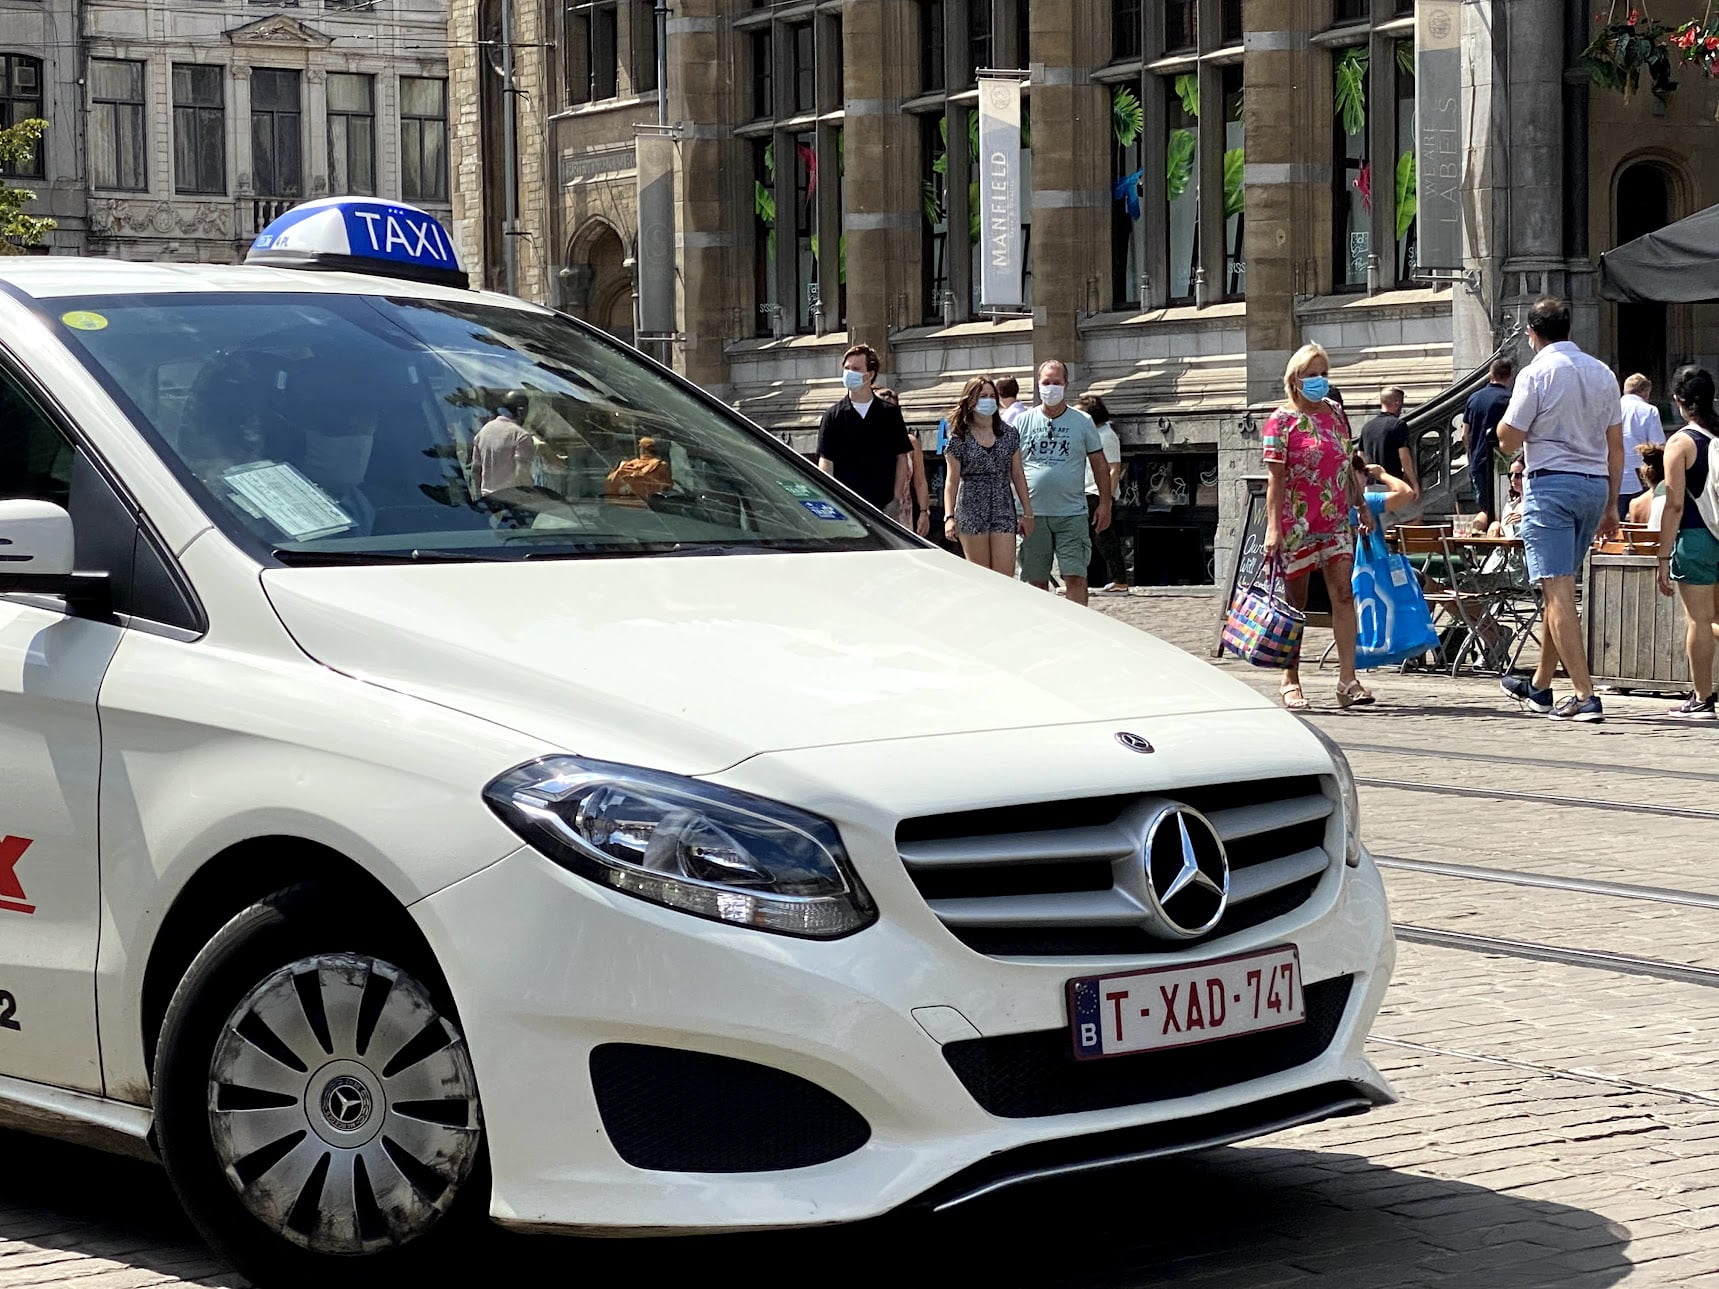 Pitane Compact succes bij Vlaamse taxichauffeurs